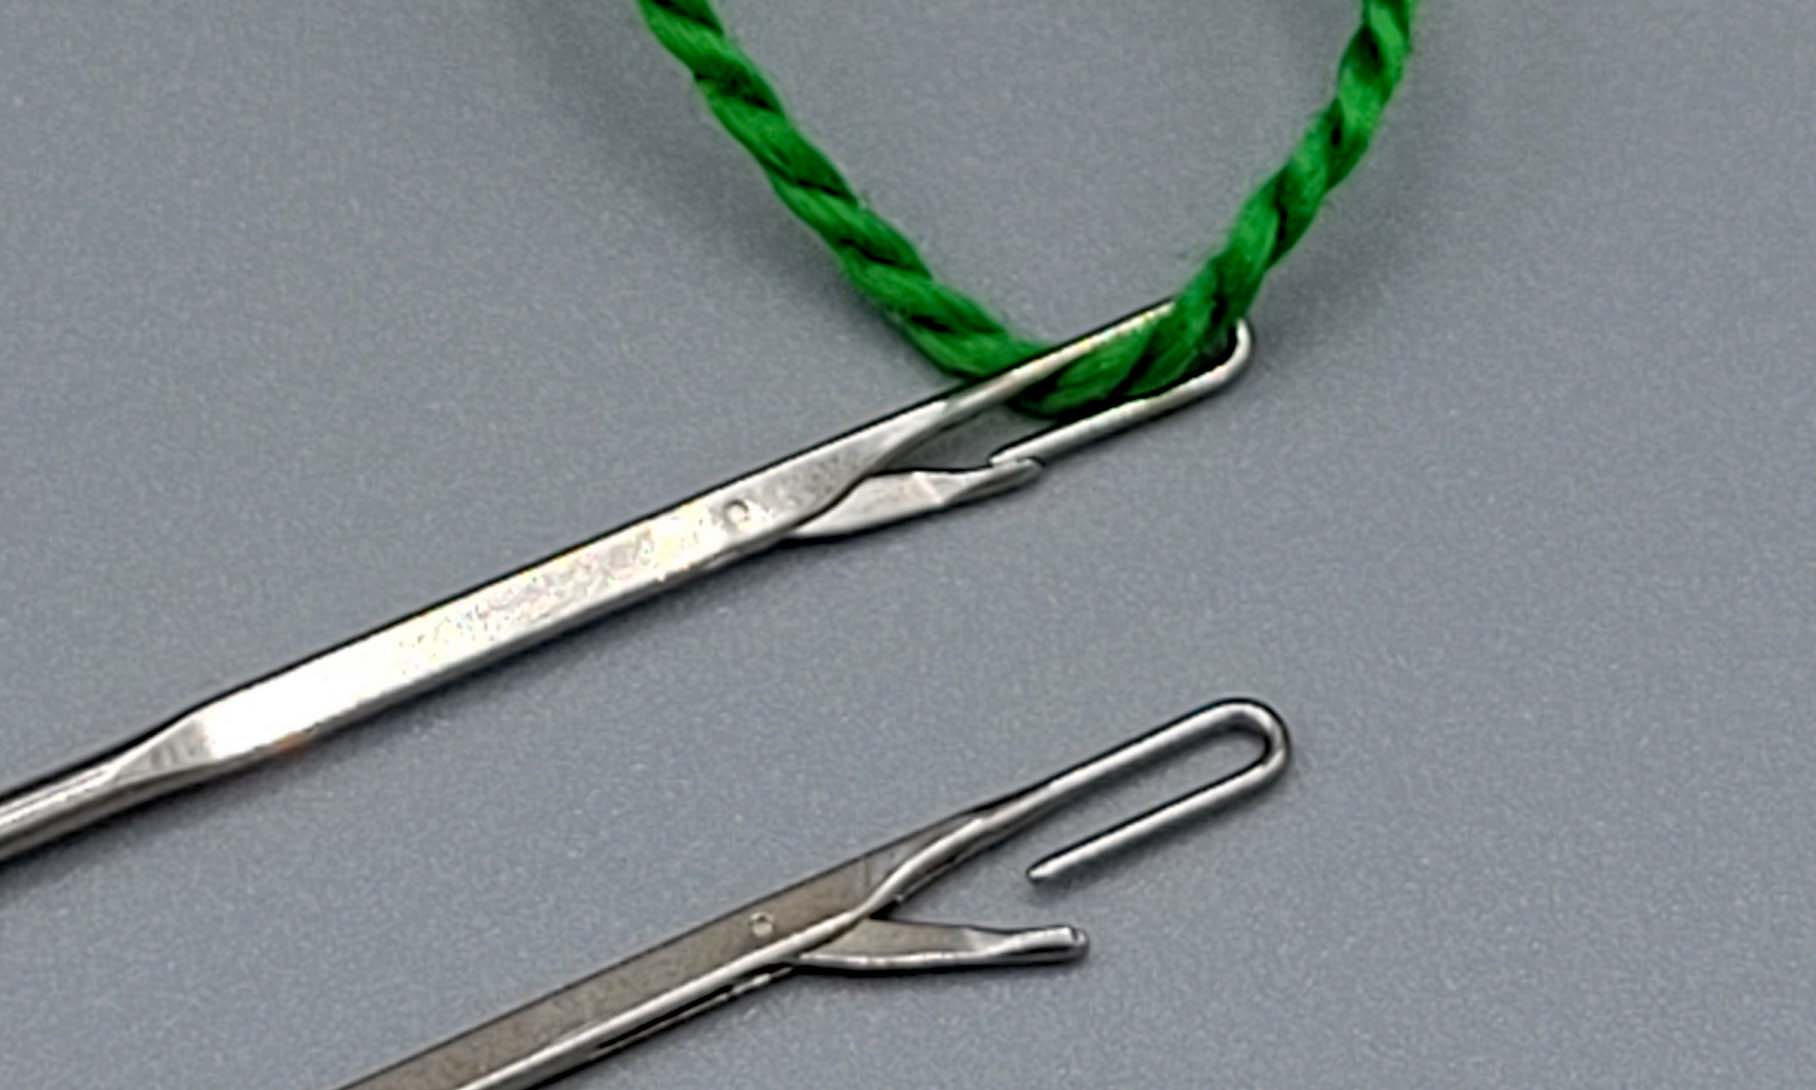 2 Darning Needles with Latch Hook Eye - Clover • PAPER SCISSORS STONE